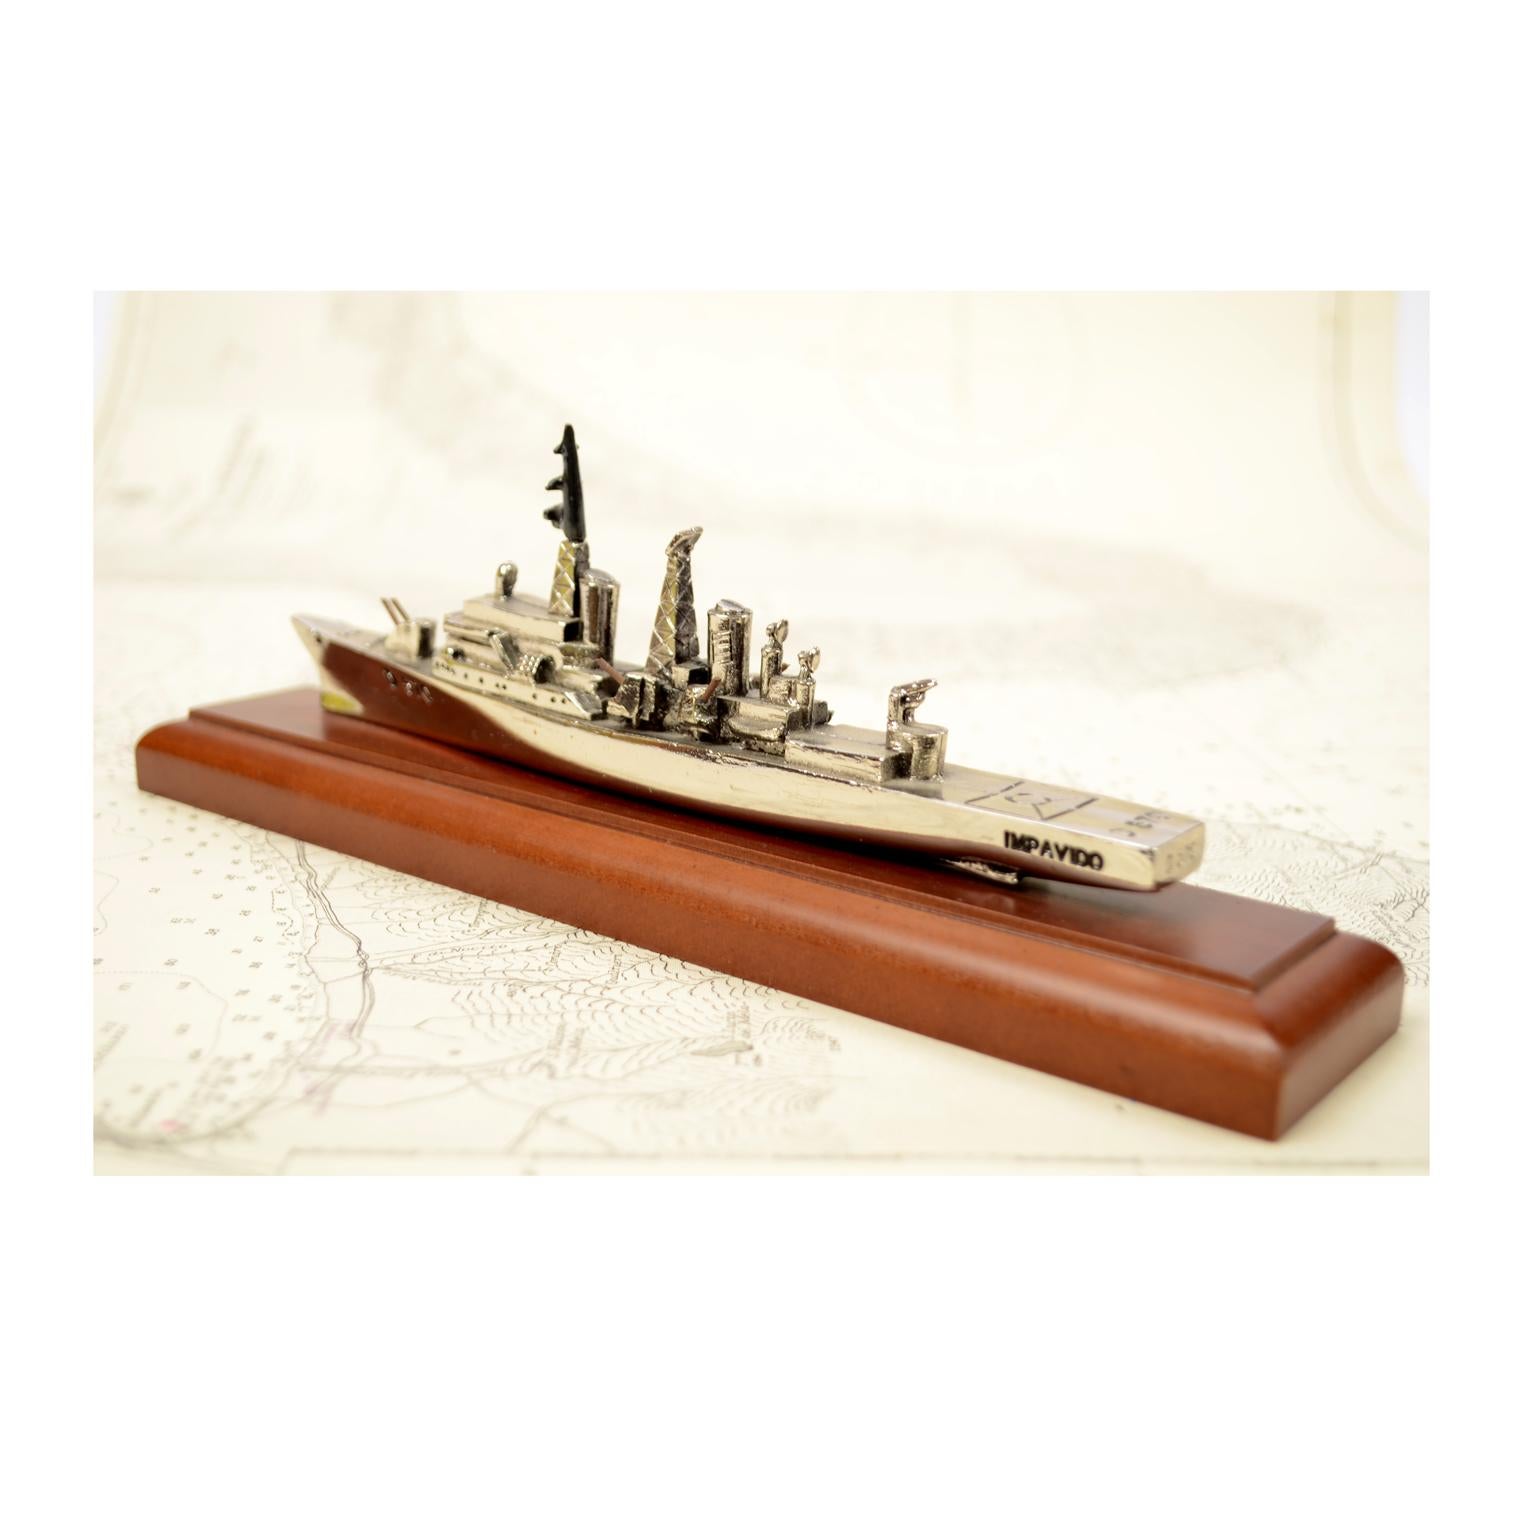 Zama Model of the Ship Impavido Mounted on a Wooden Board 4